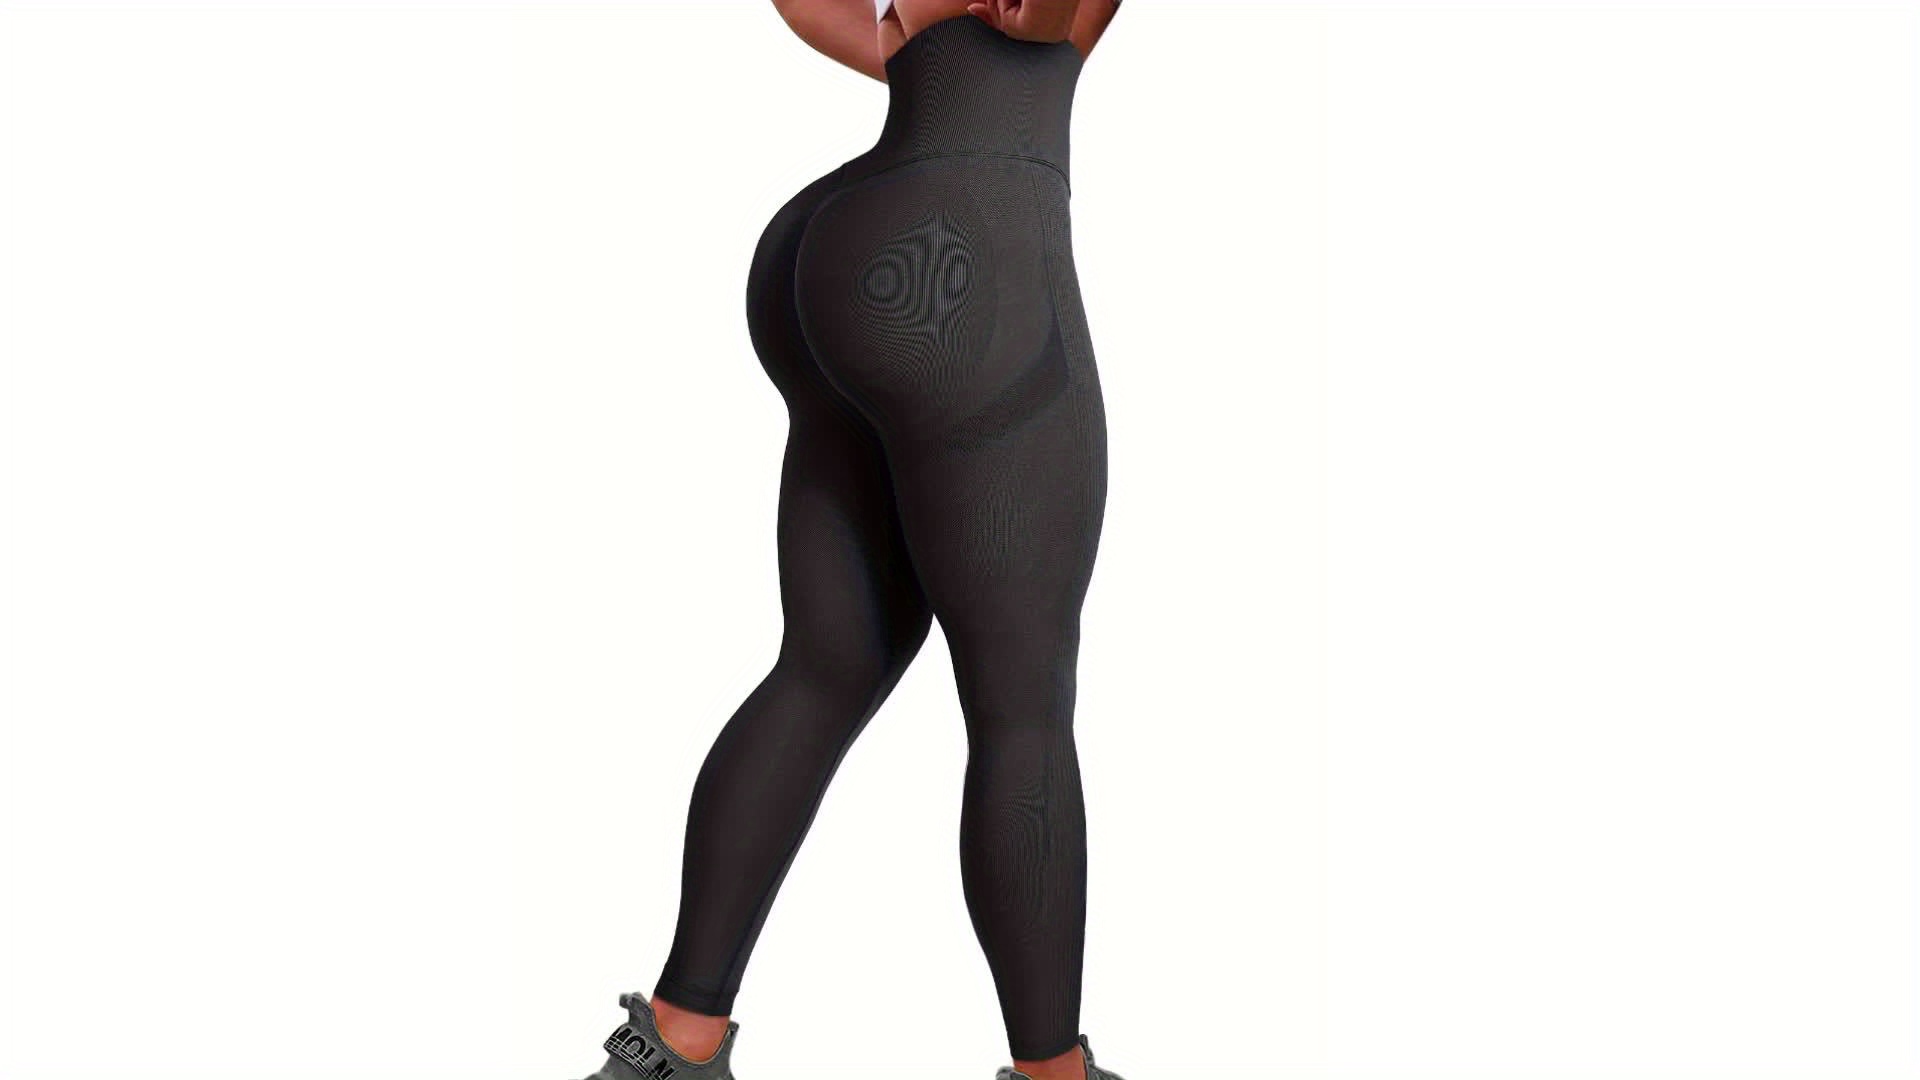 Gyouwnll Women's Ruched Butt Lifting High Waist Yoga Pants